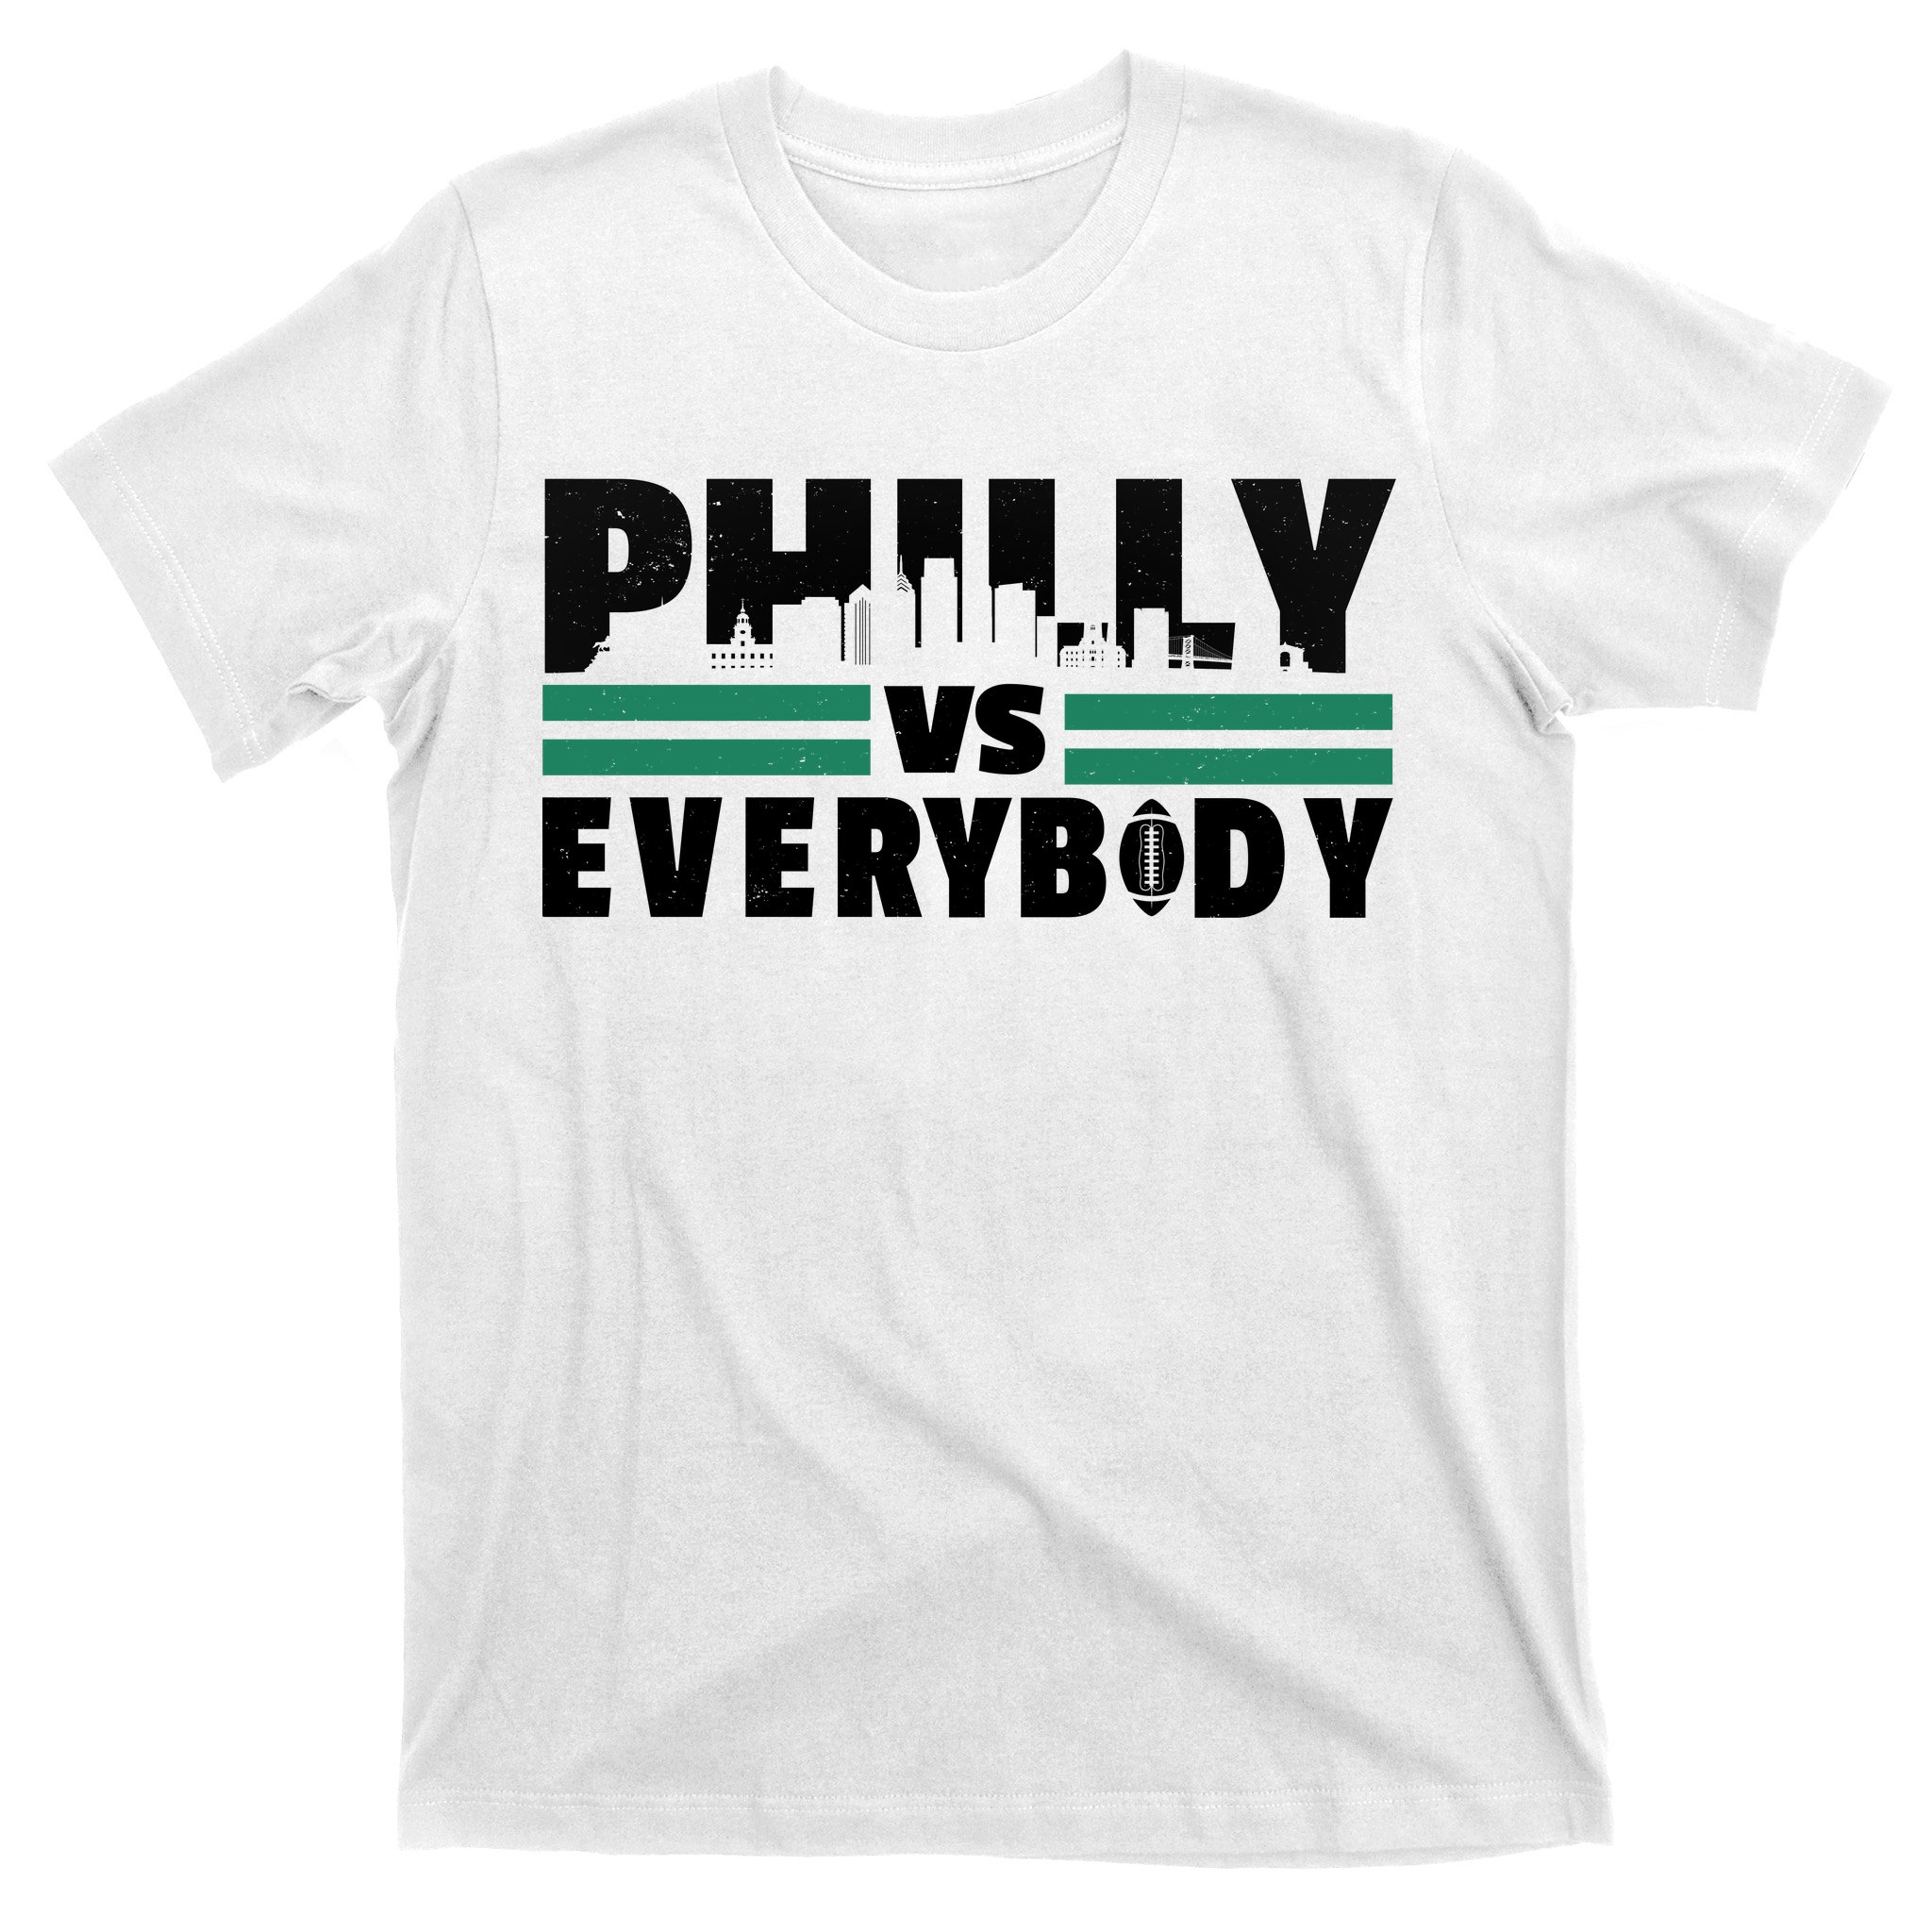 Philadelphia Phillies Burst Tie-Dye T-Shirt